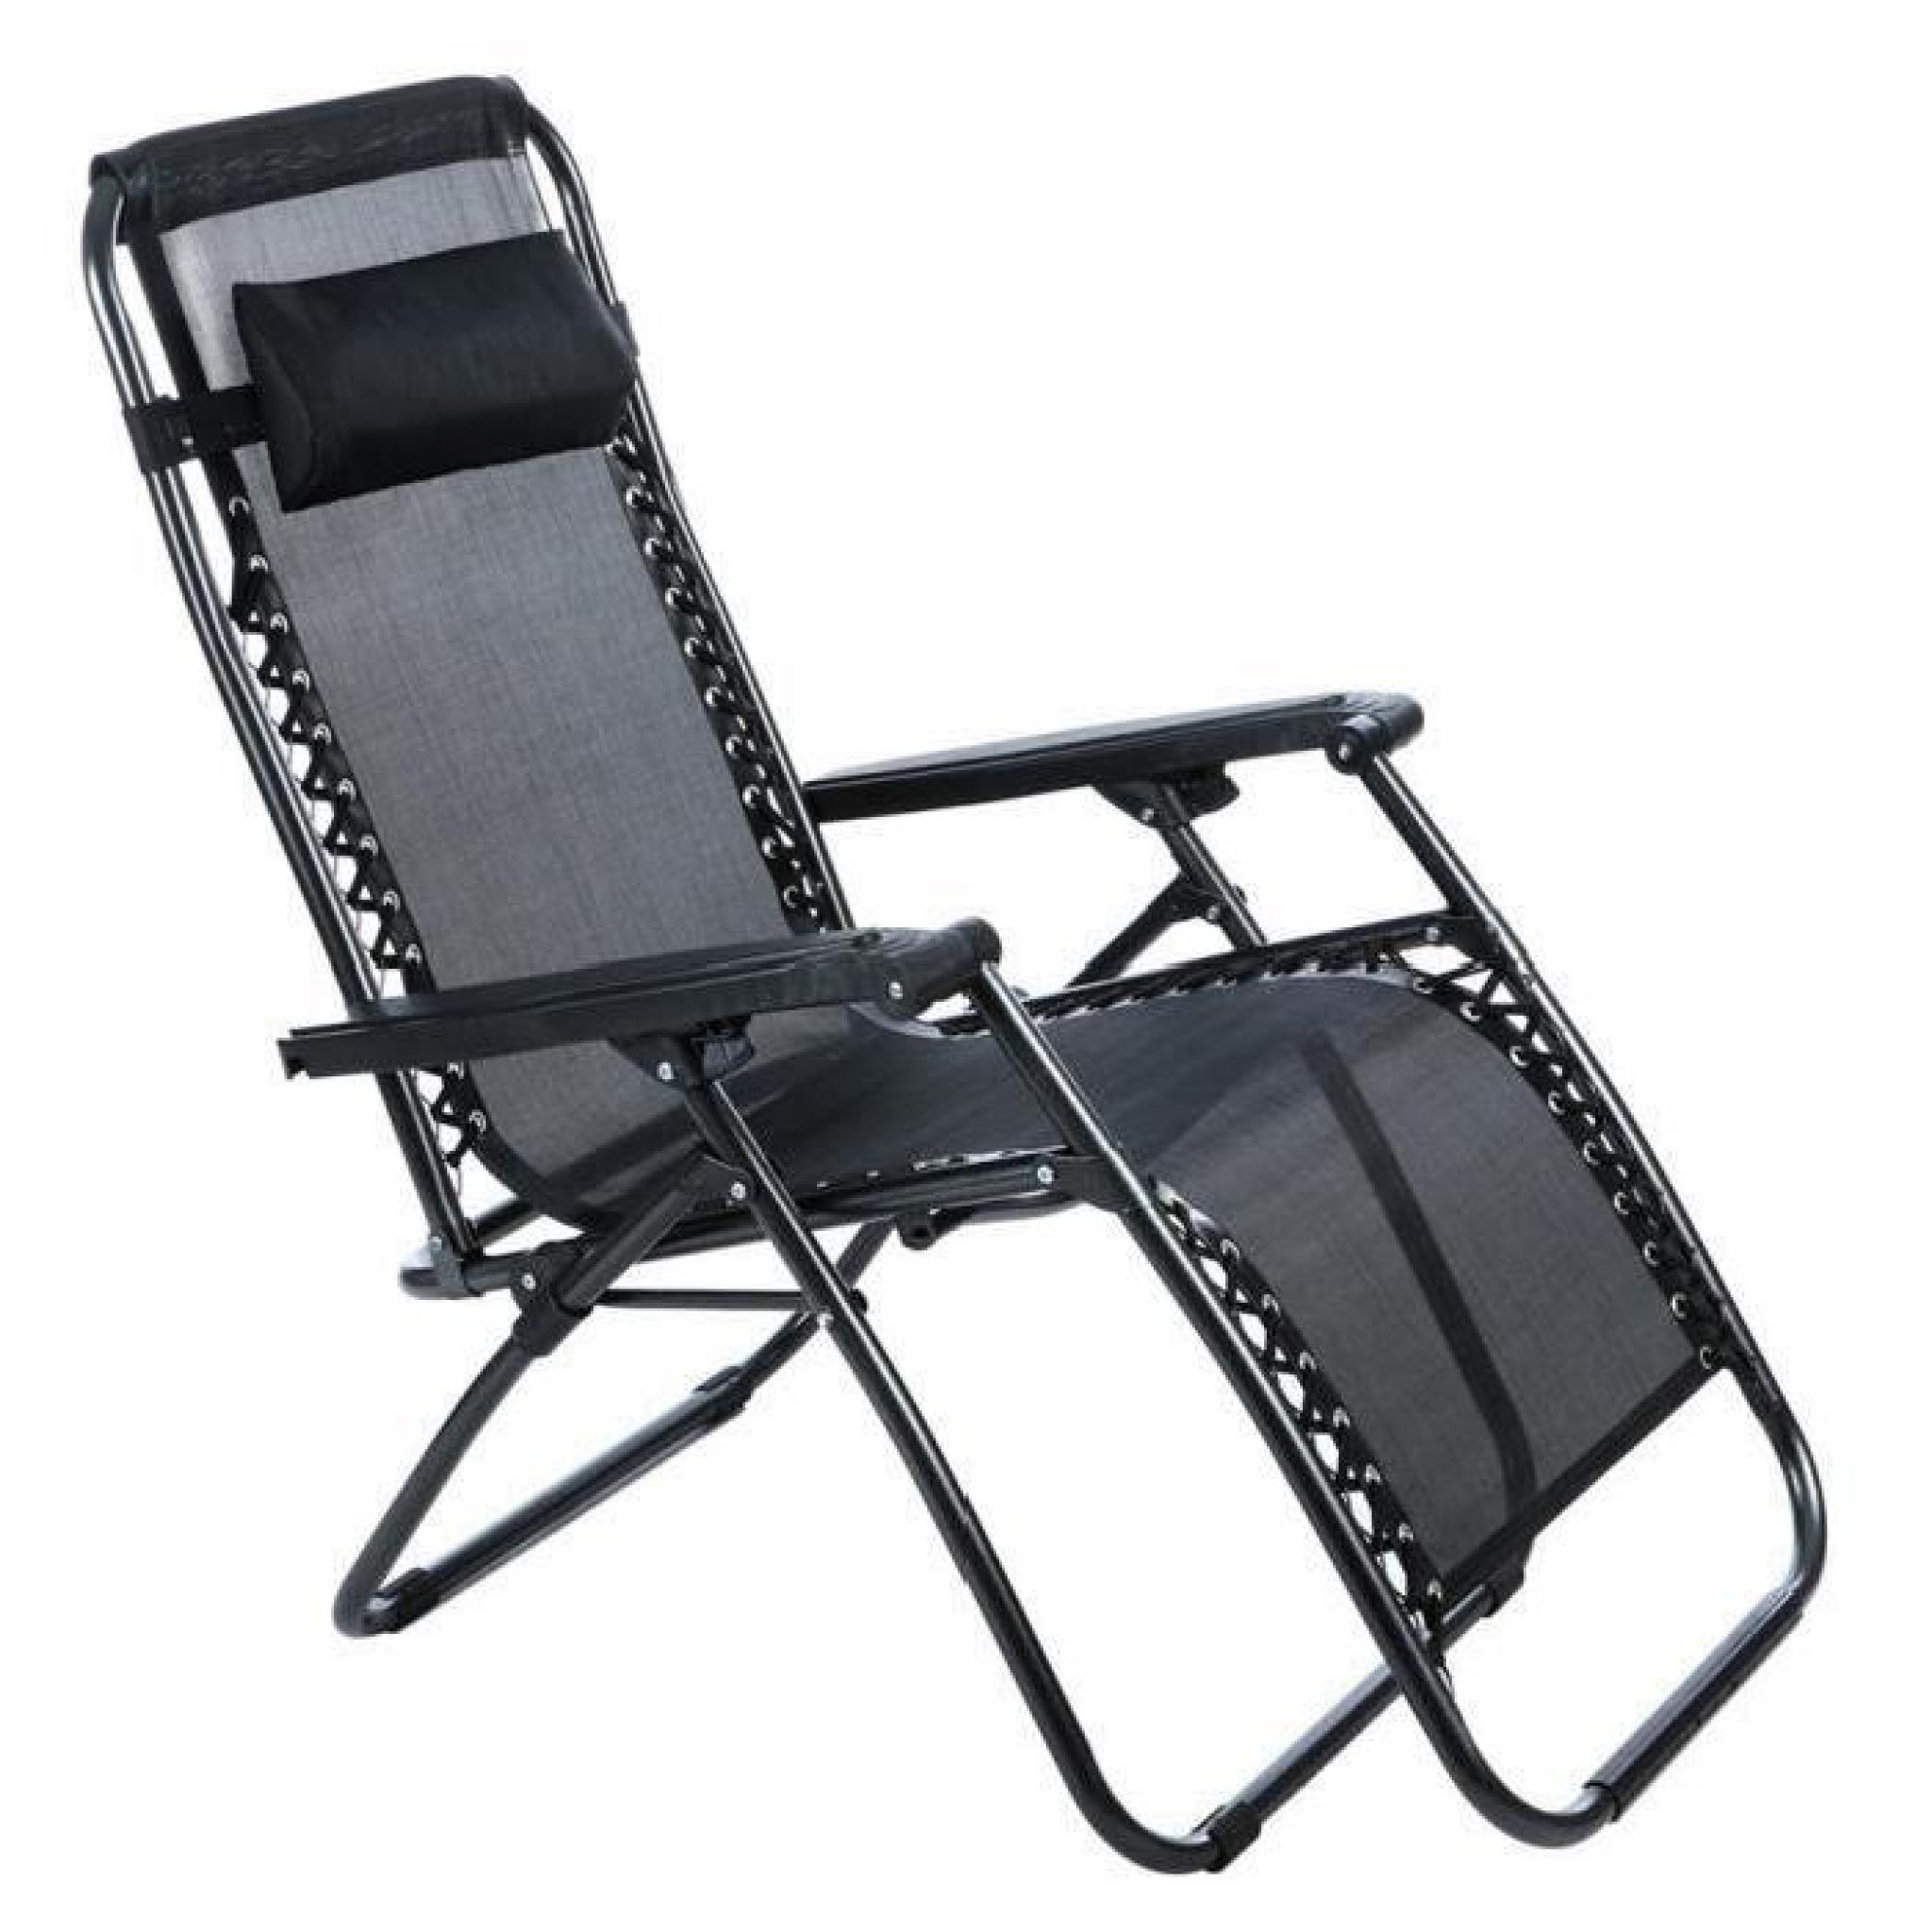 Chaise inclinable salon Jardin plage Camping chaise extérieure pas cher